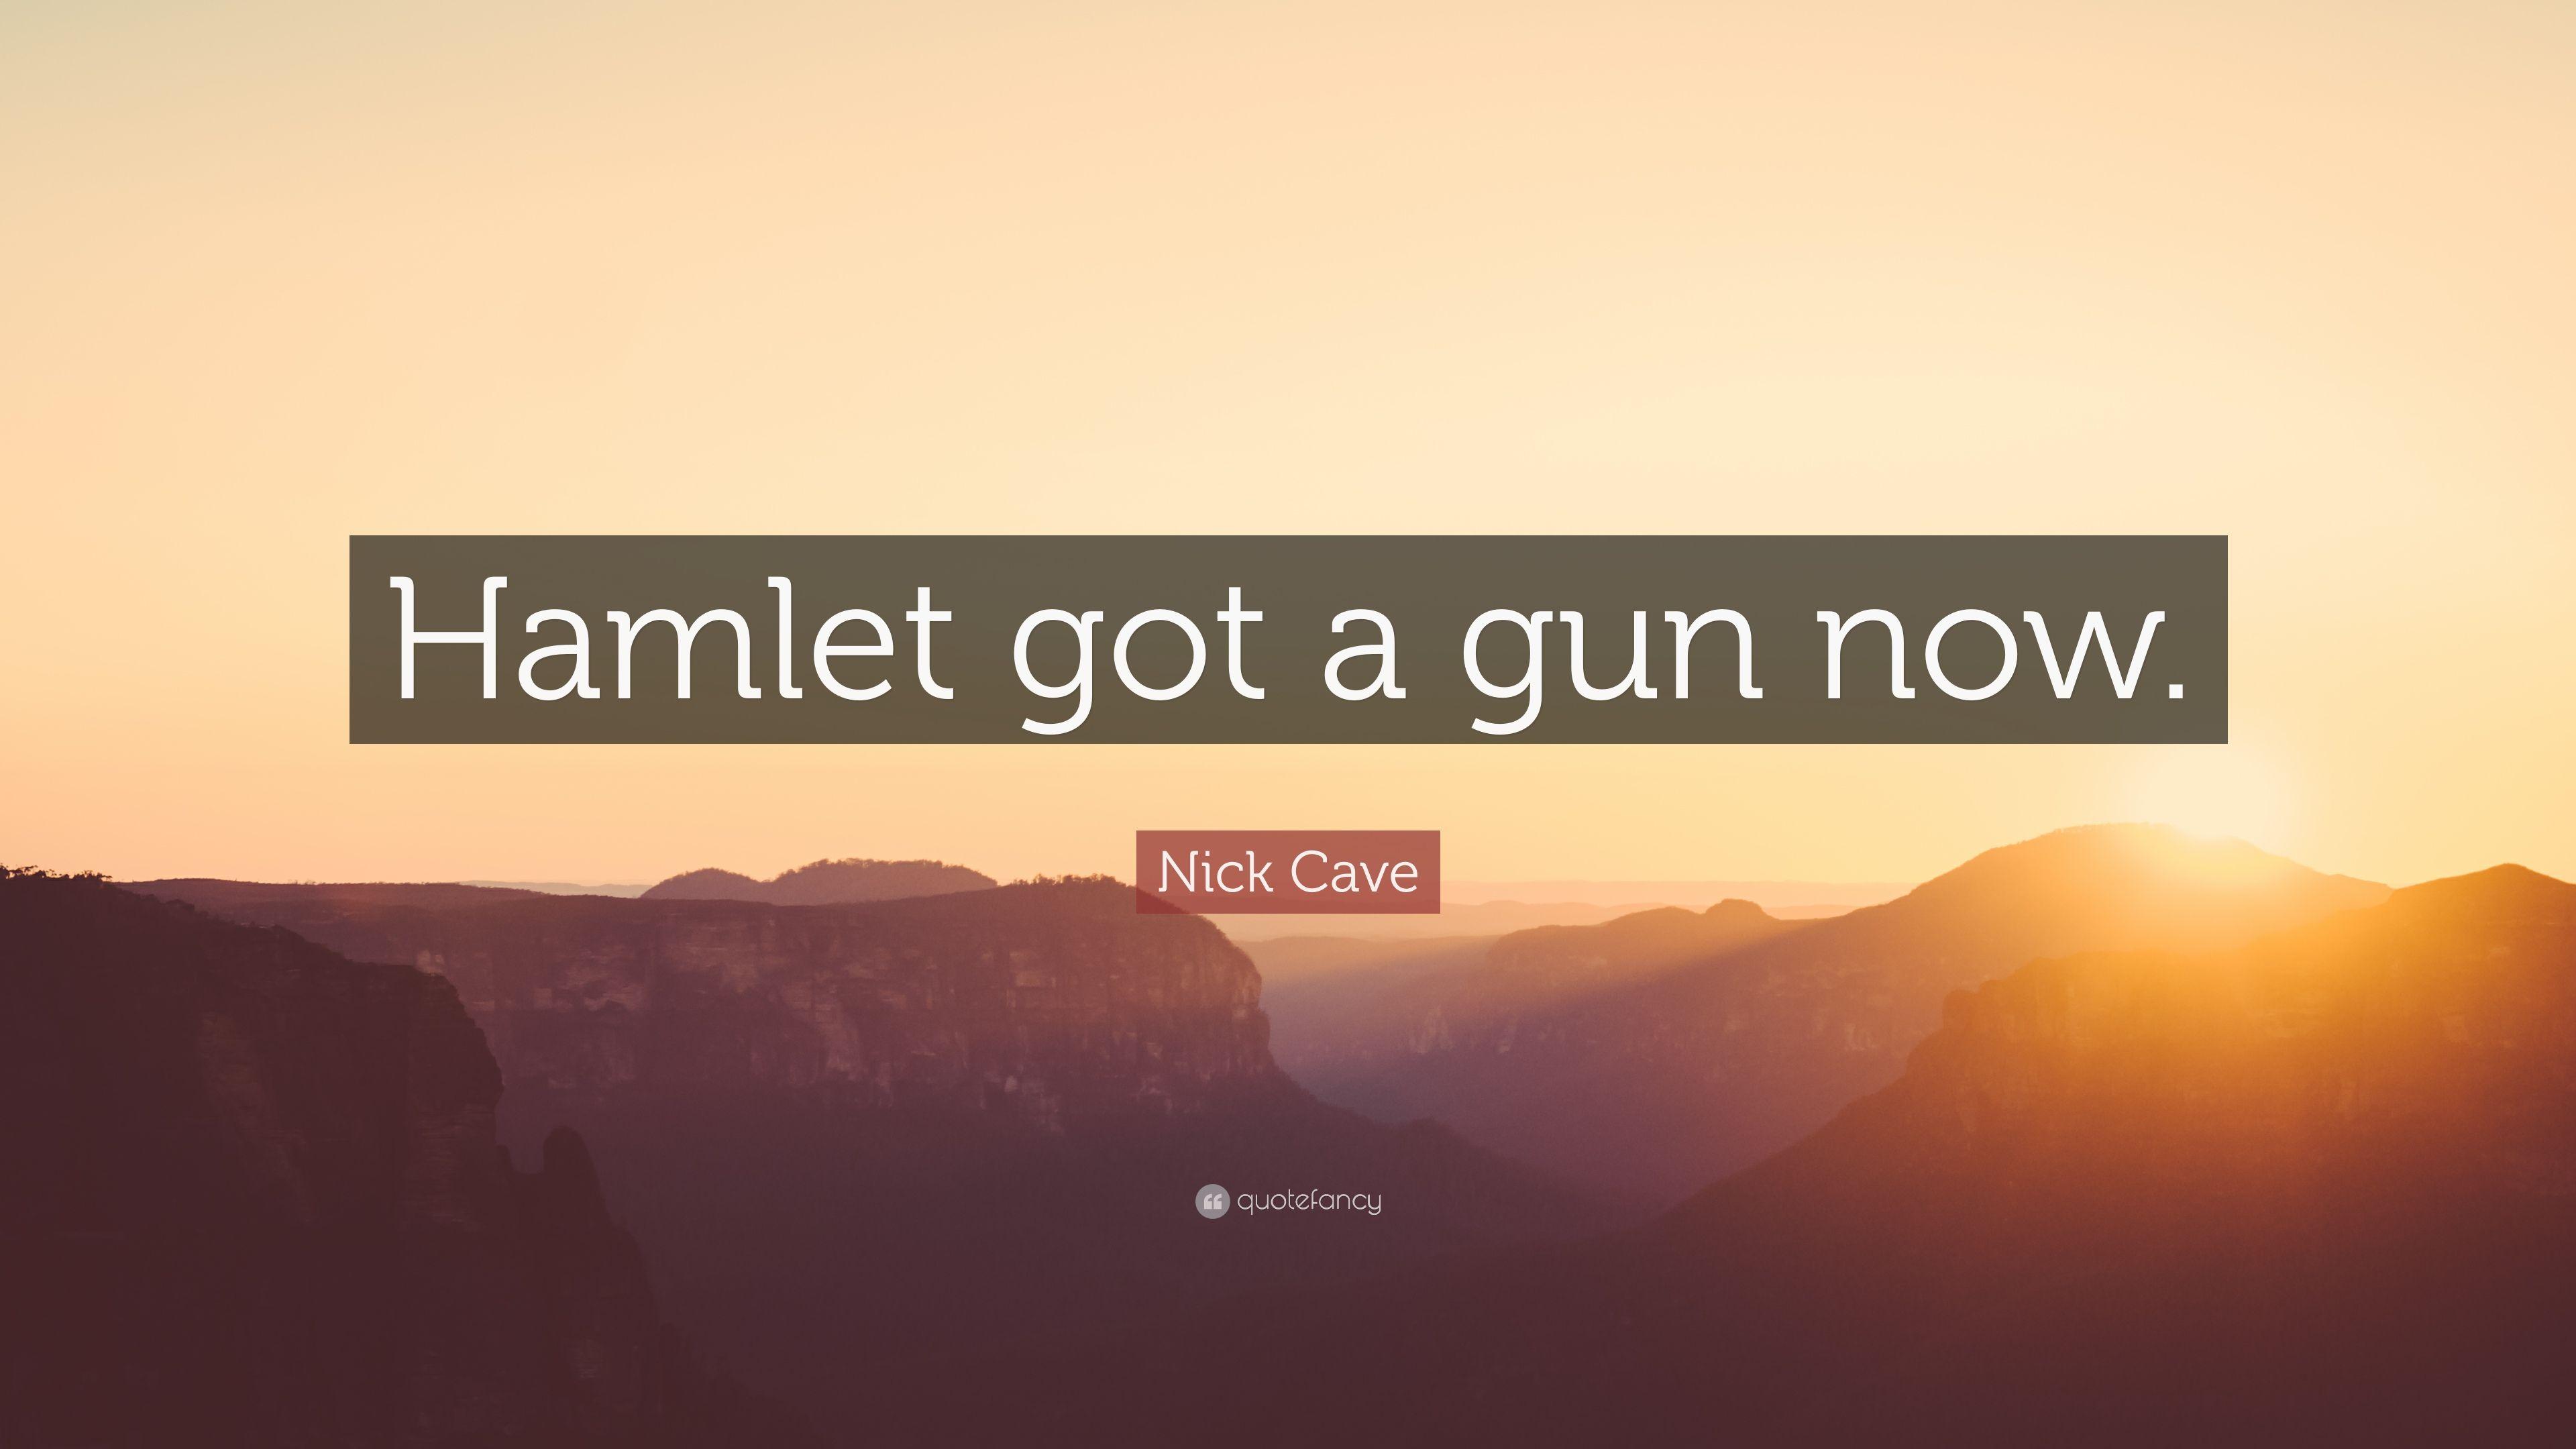 Nick Cave Quote: “Hamlet got a gun now.” (9 wallpaper)